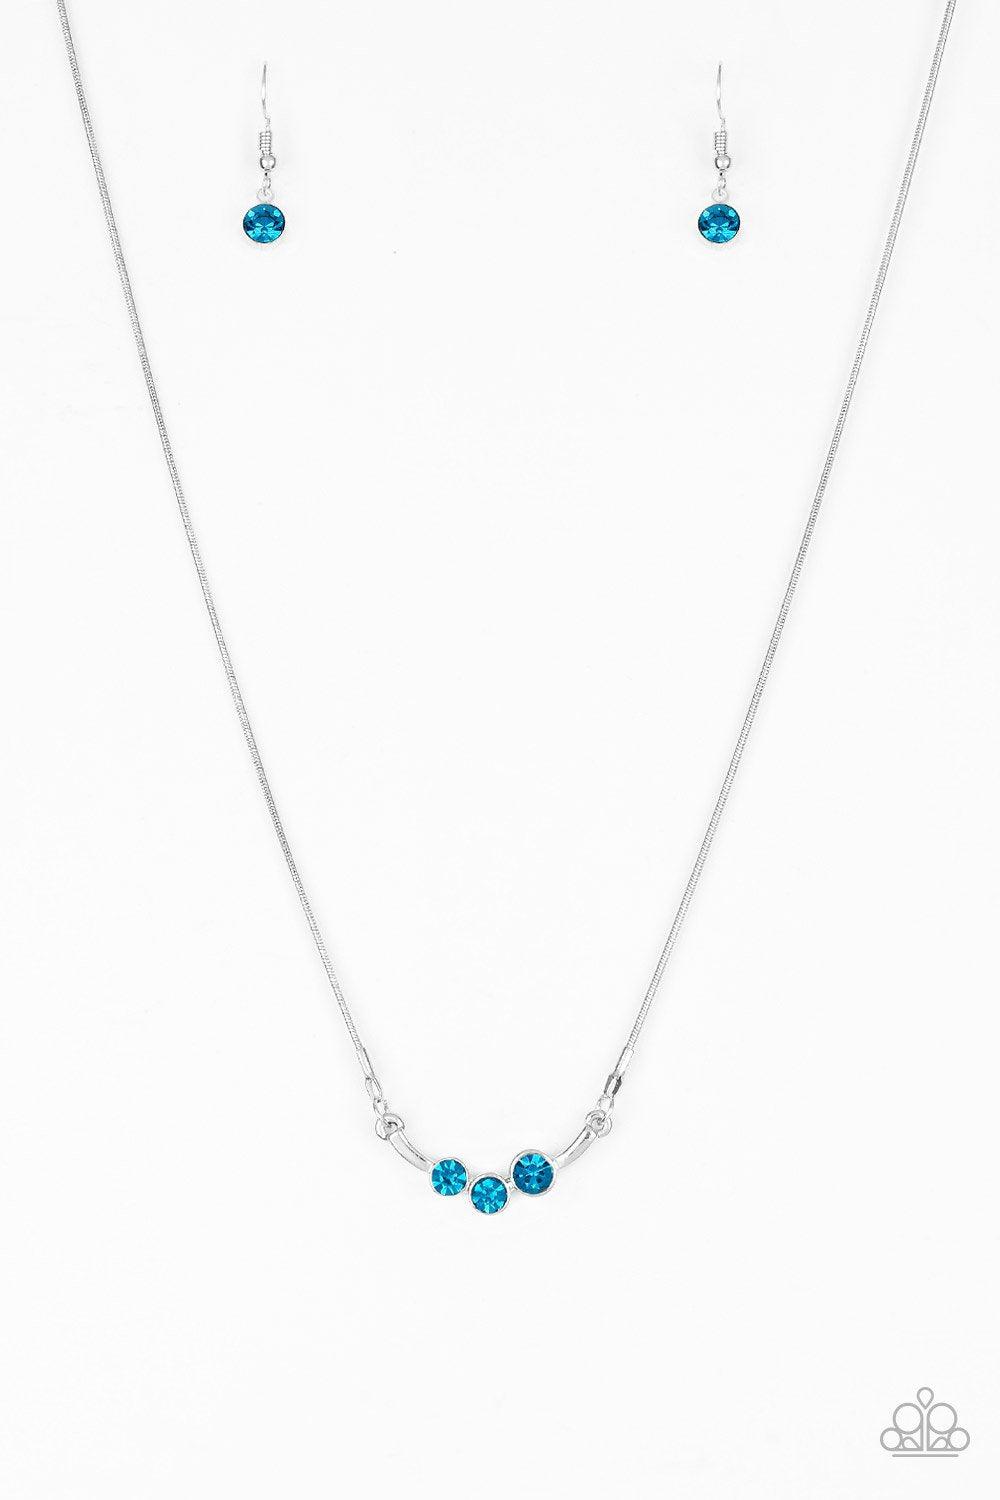 Sparkling Stargazer Blue Rhinestone Necklace - Paparazzi Accessories- lightbox - CarasShop.com - $5 Jewelry by Cara Jewels